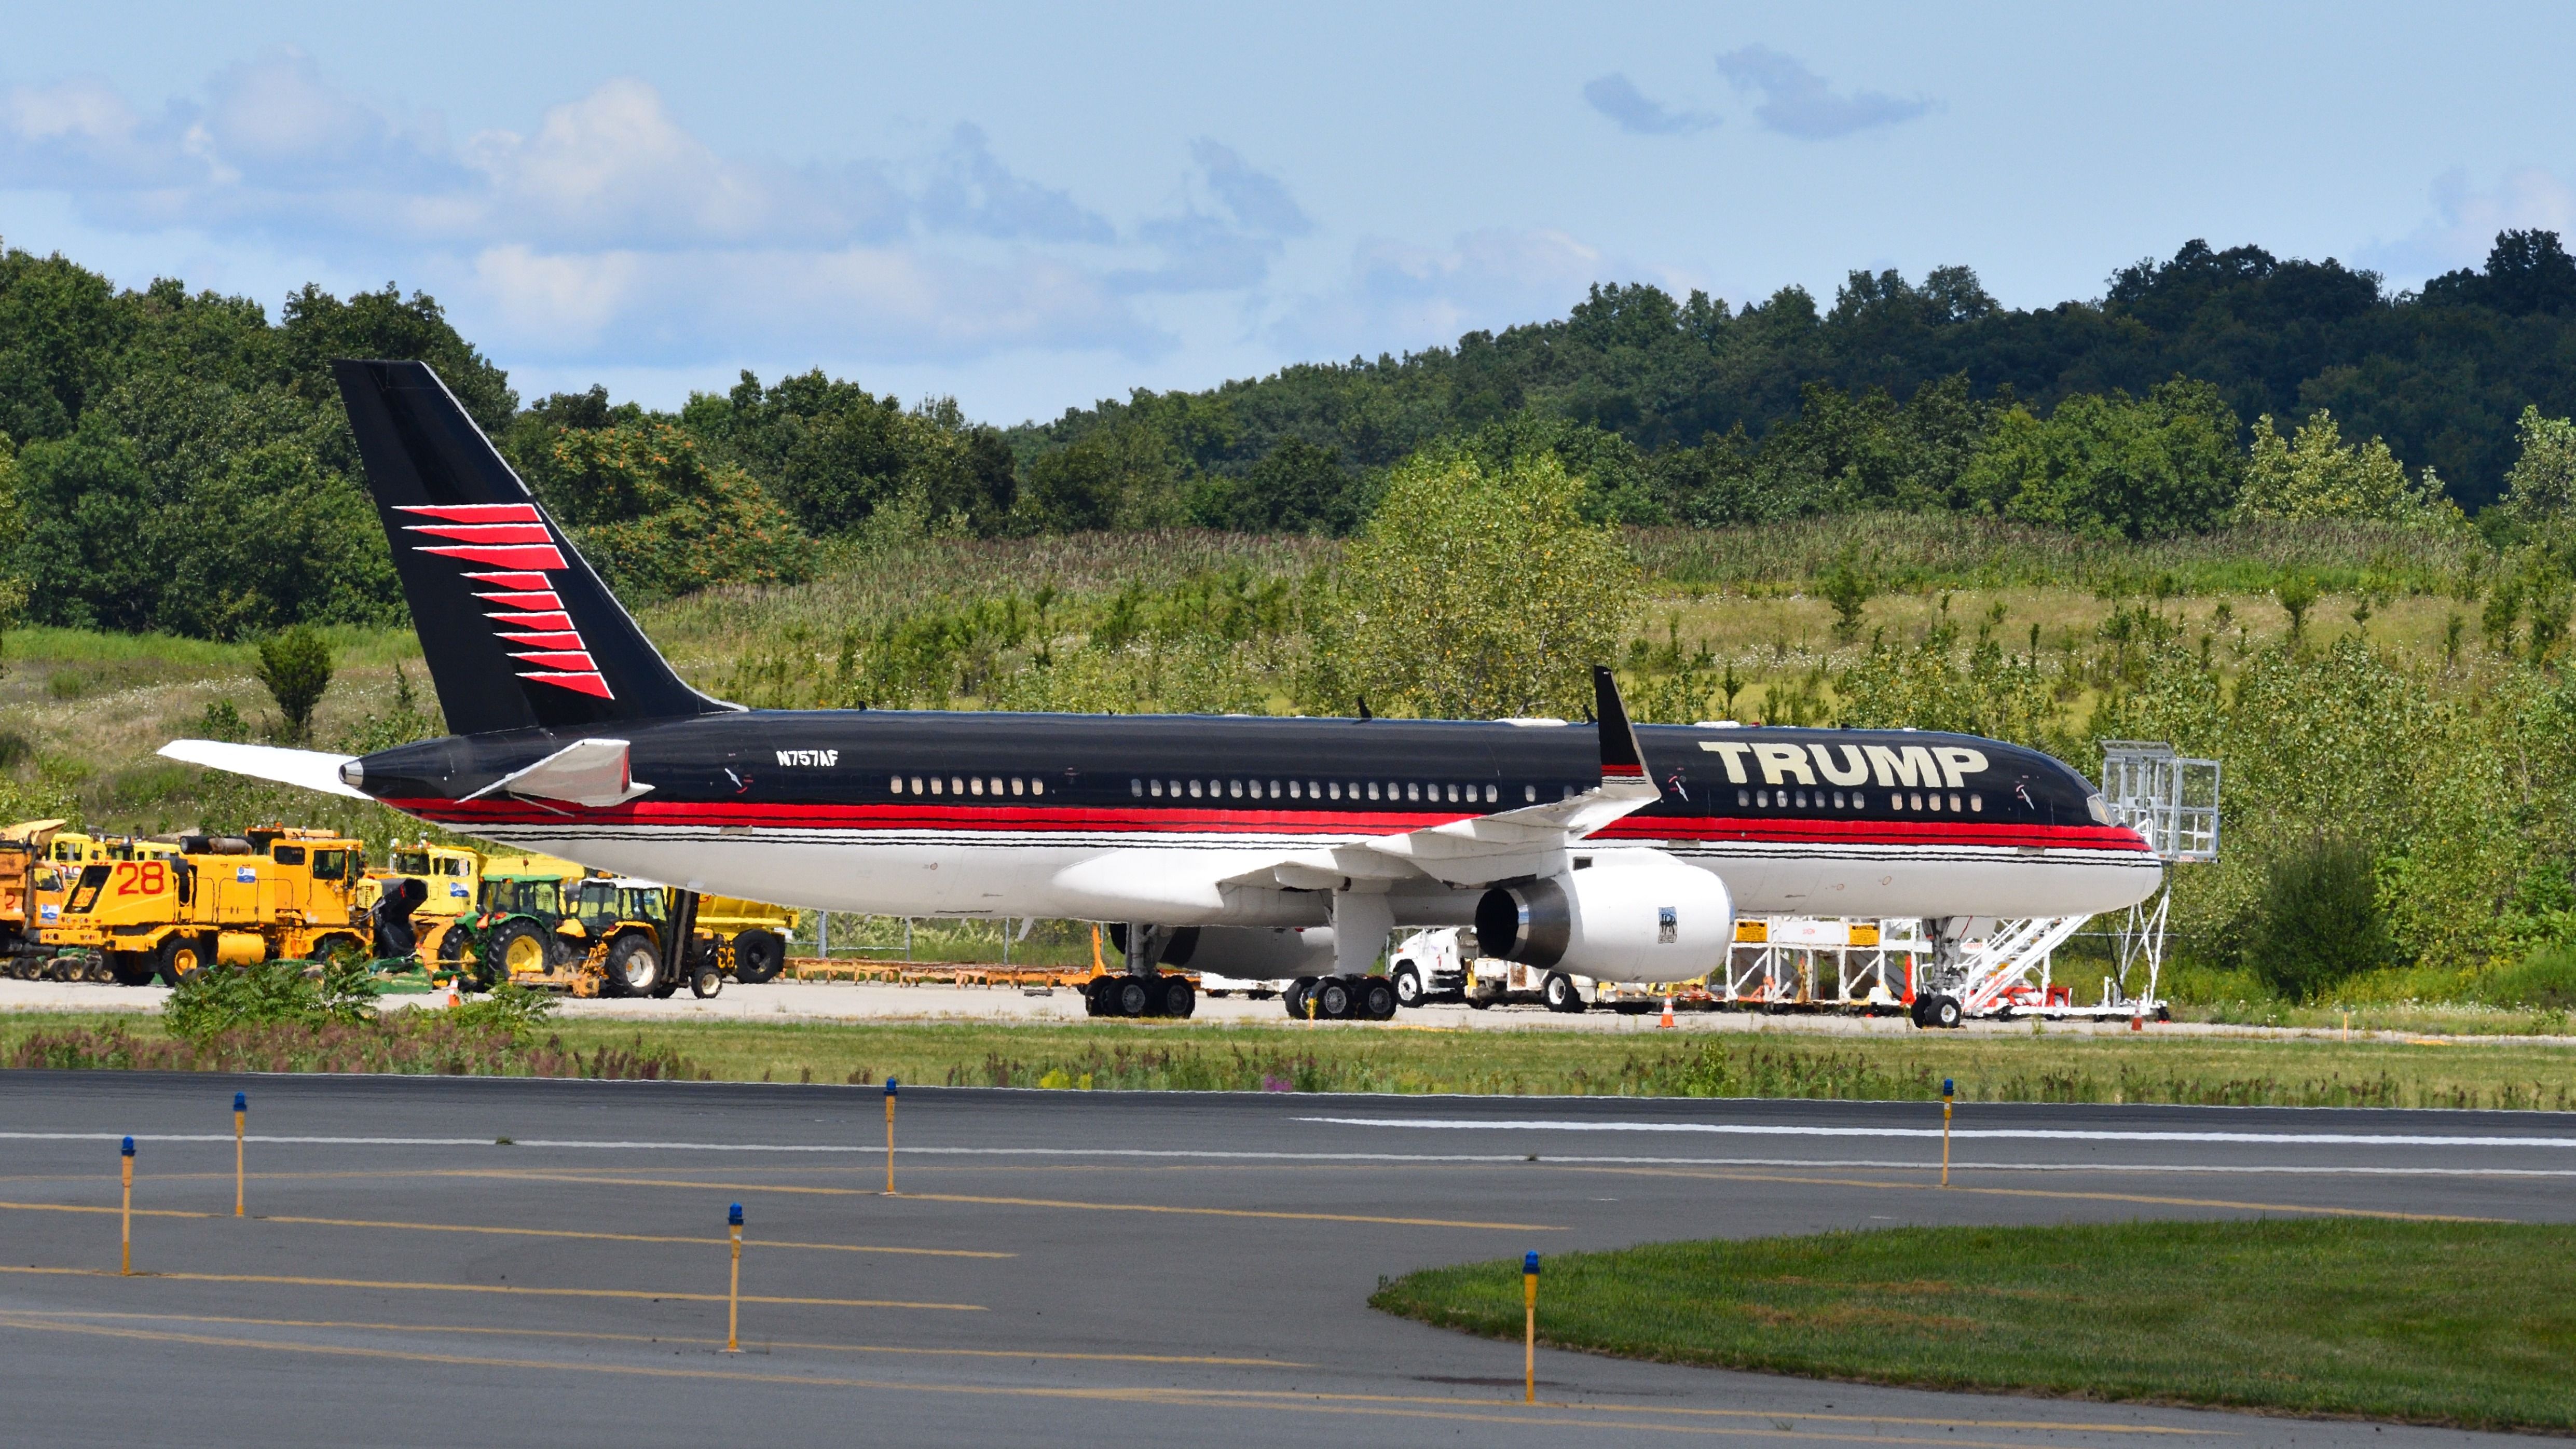 Trump's Boeing 757 aircraft